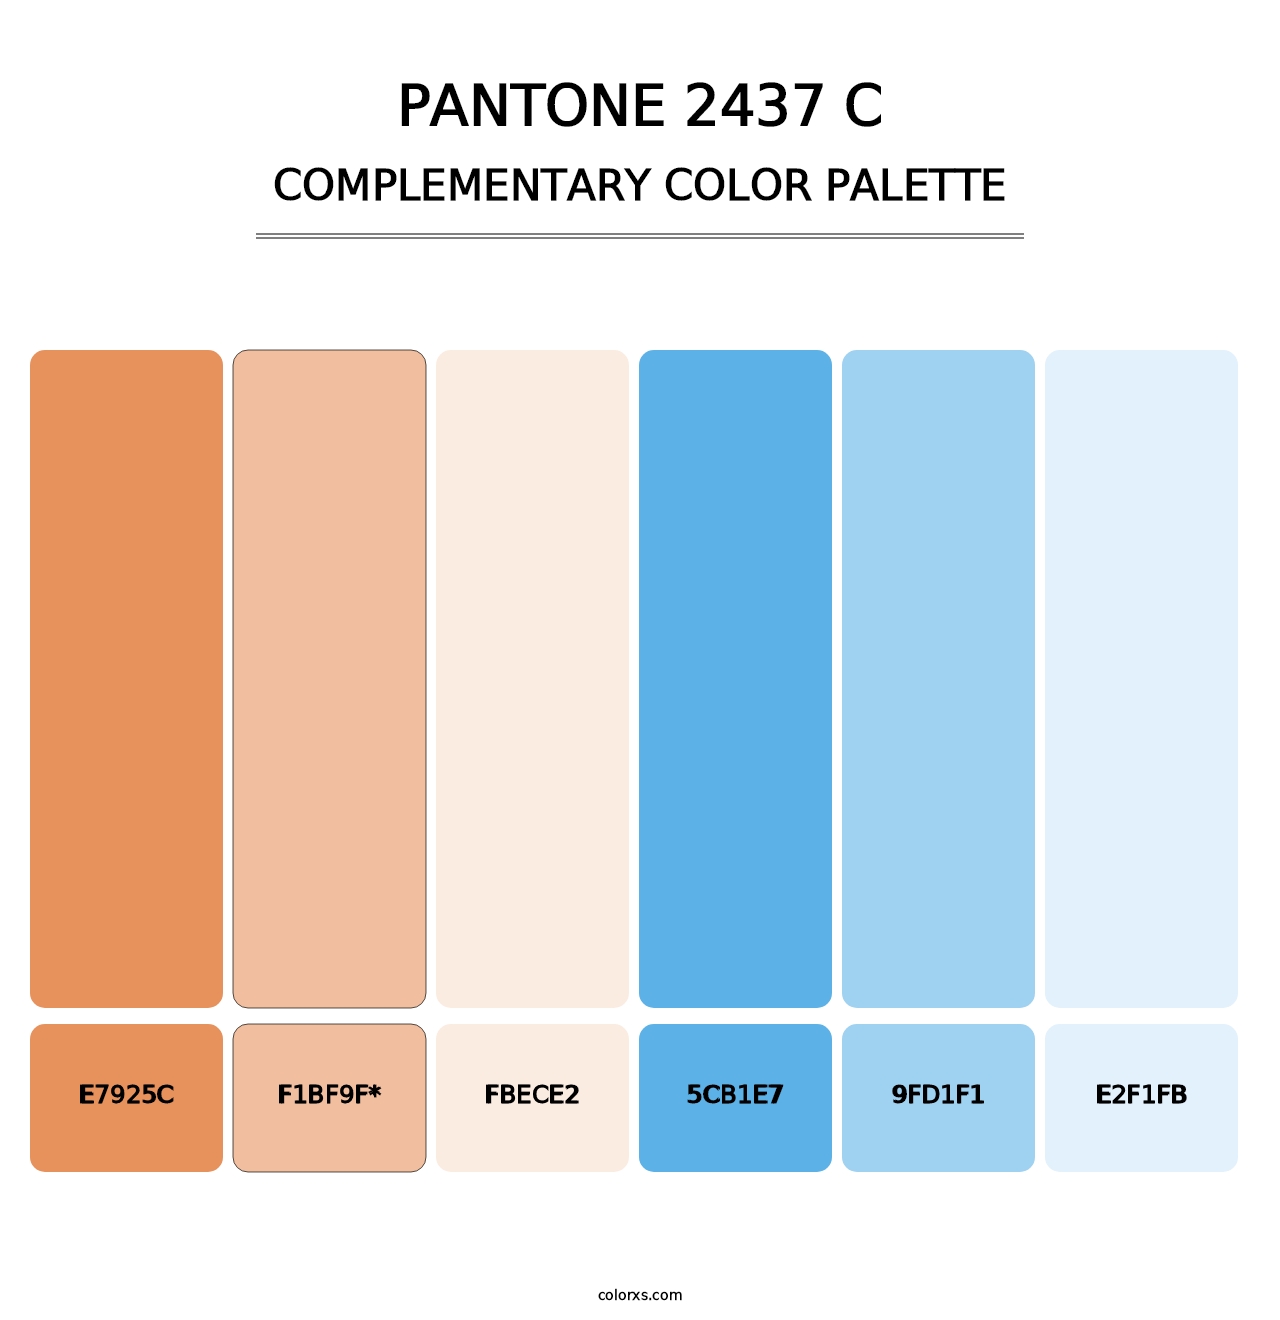 PANTONE 2437 C - Complementary Color Palette